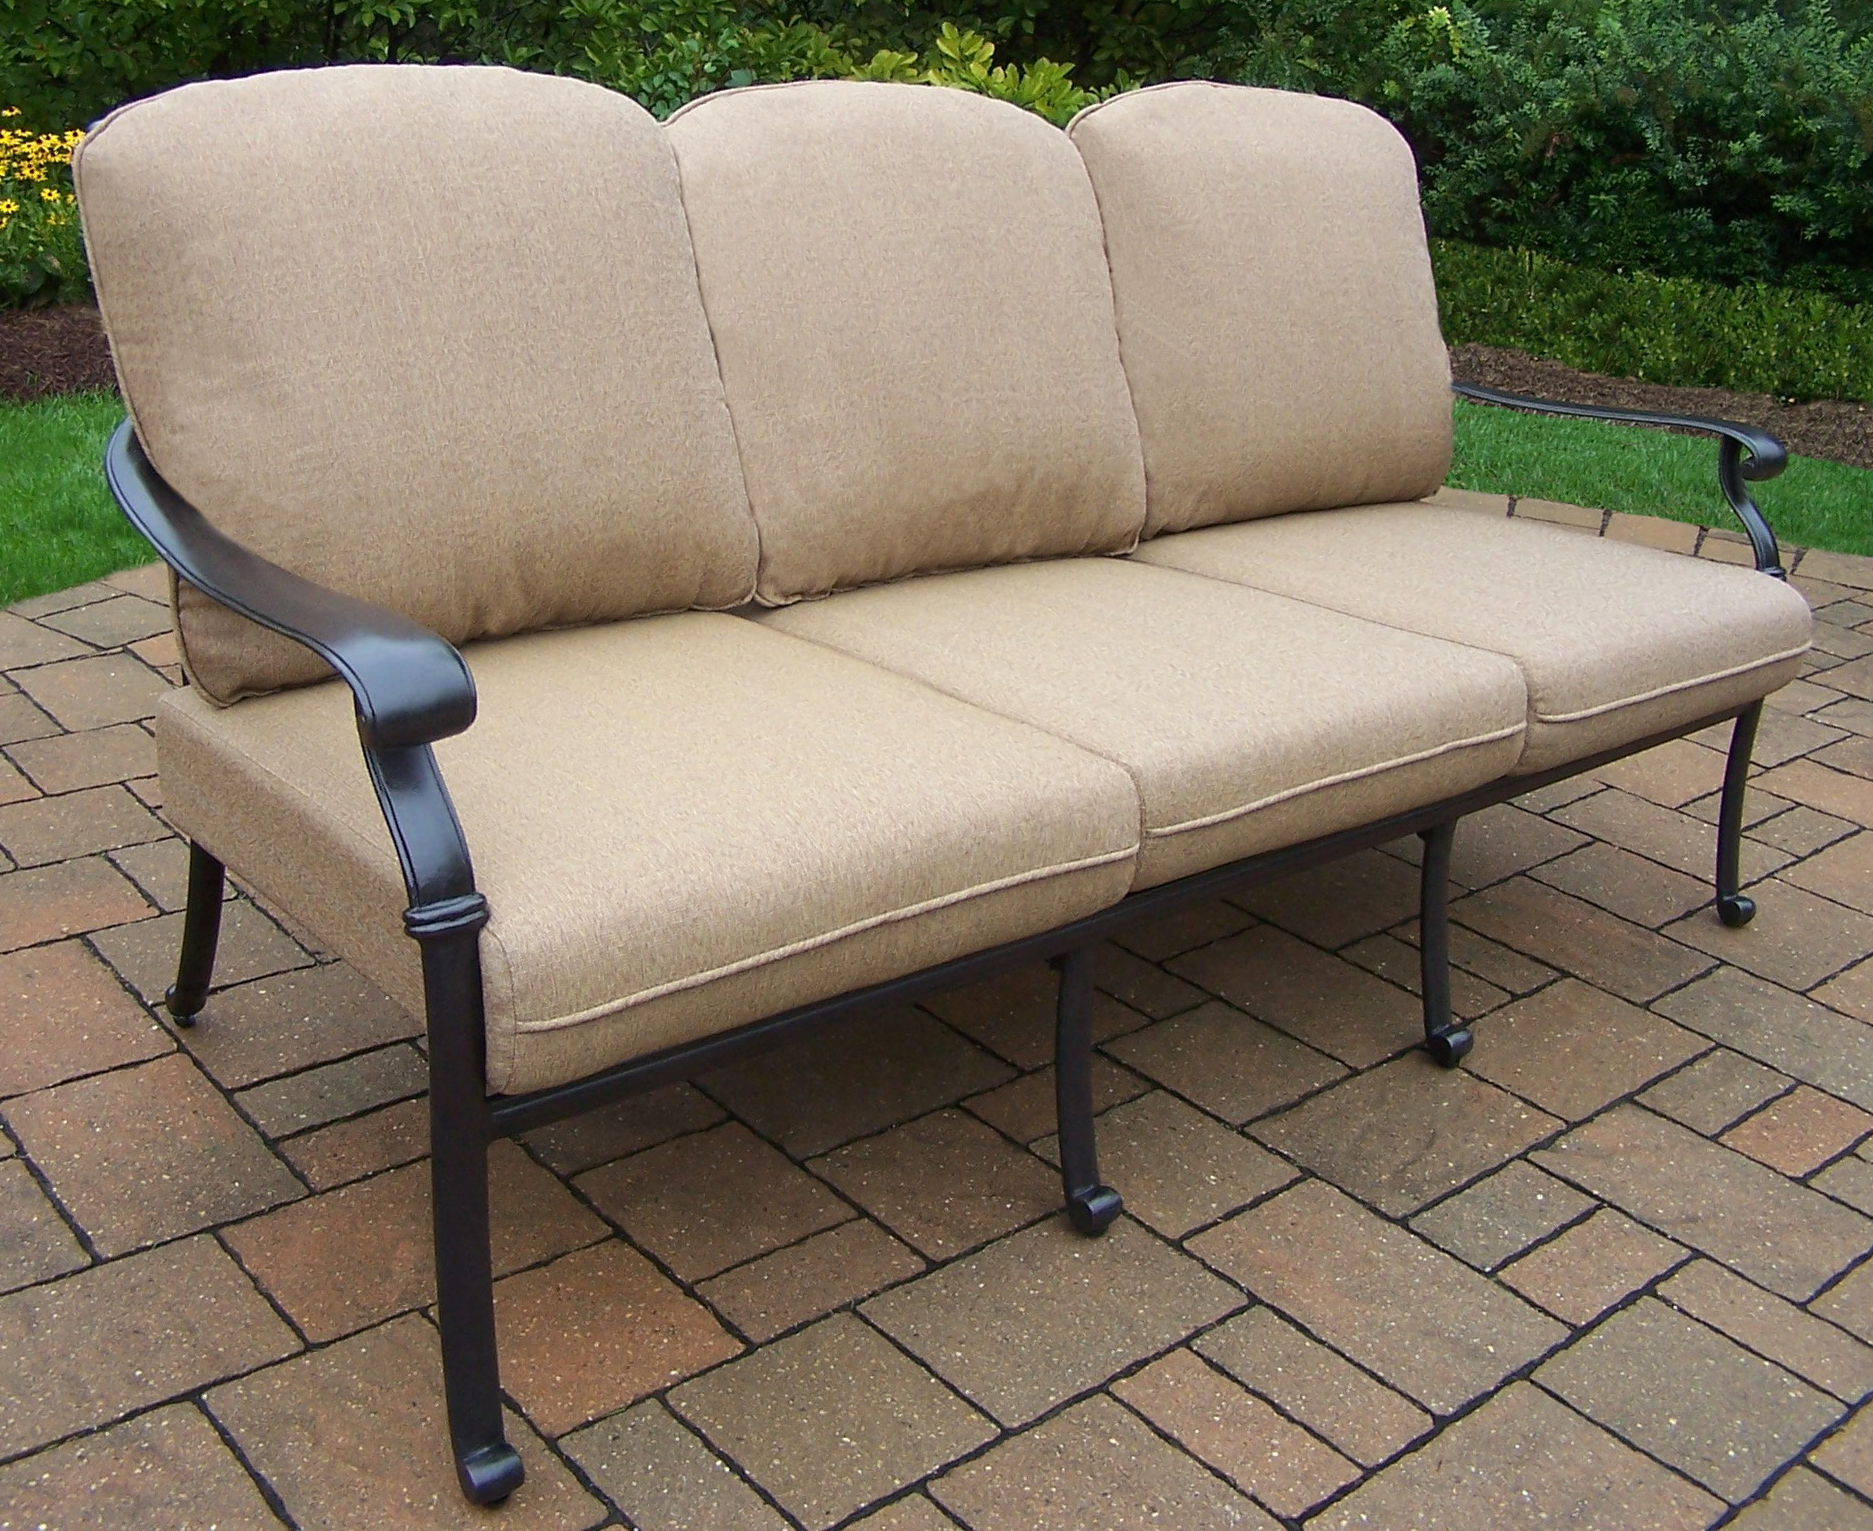 Oakland Living Aluminum Deep Seating Sofa with durable spun polyester cushions